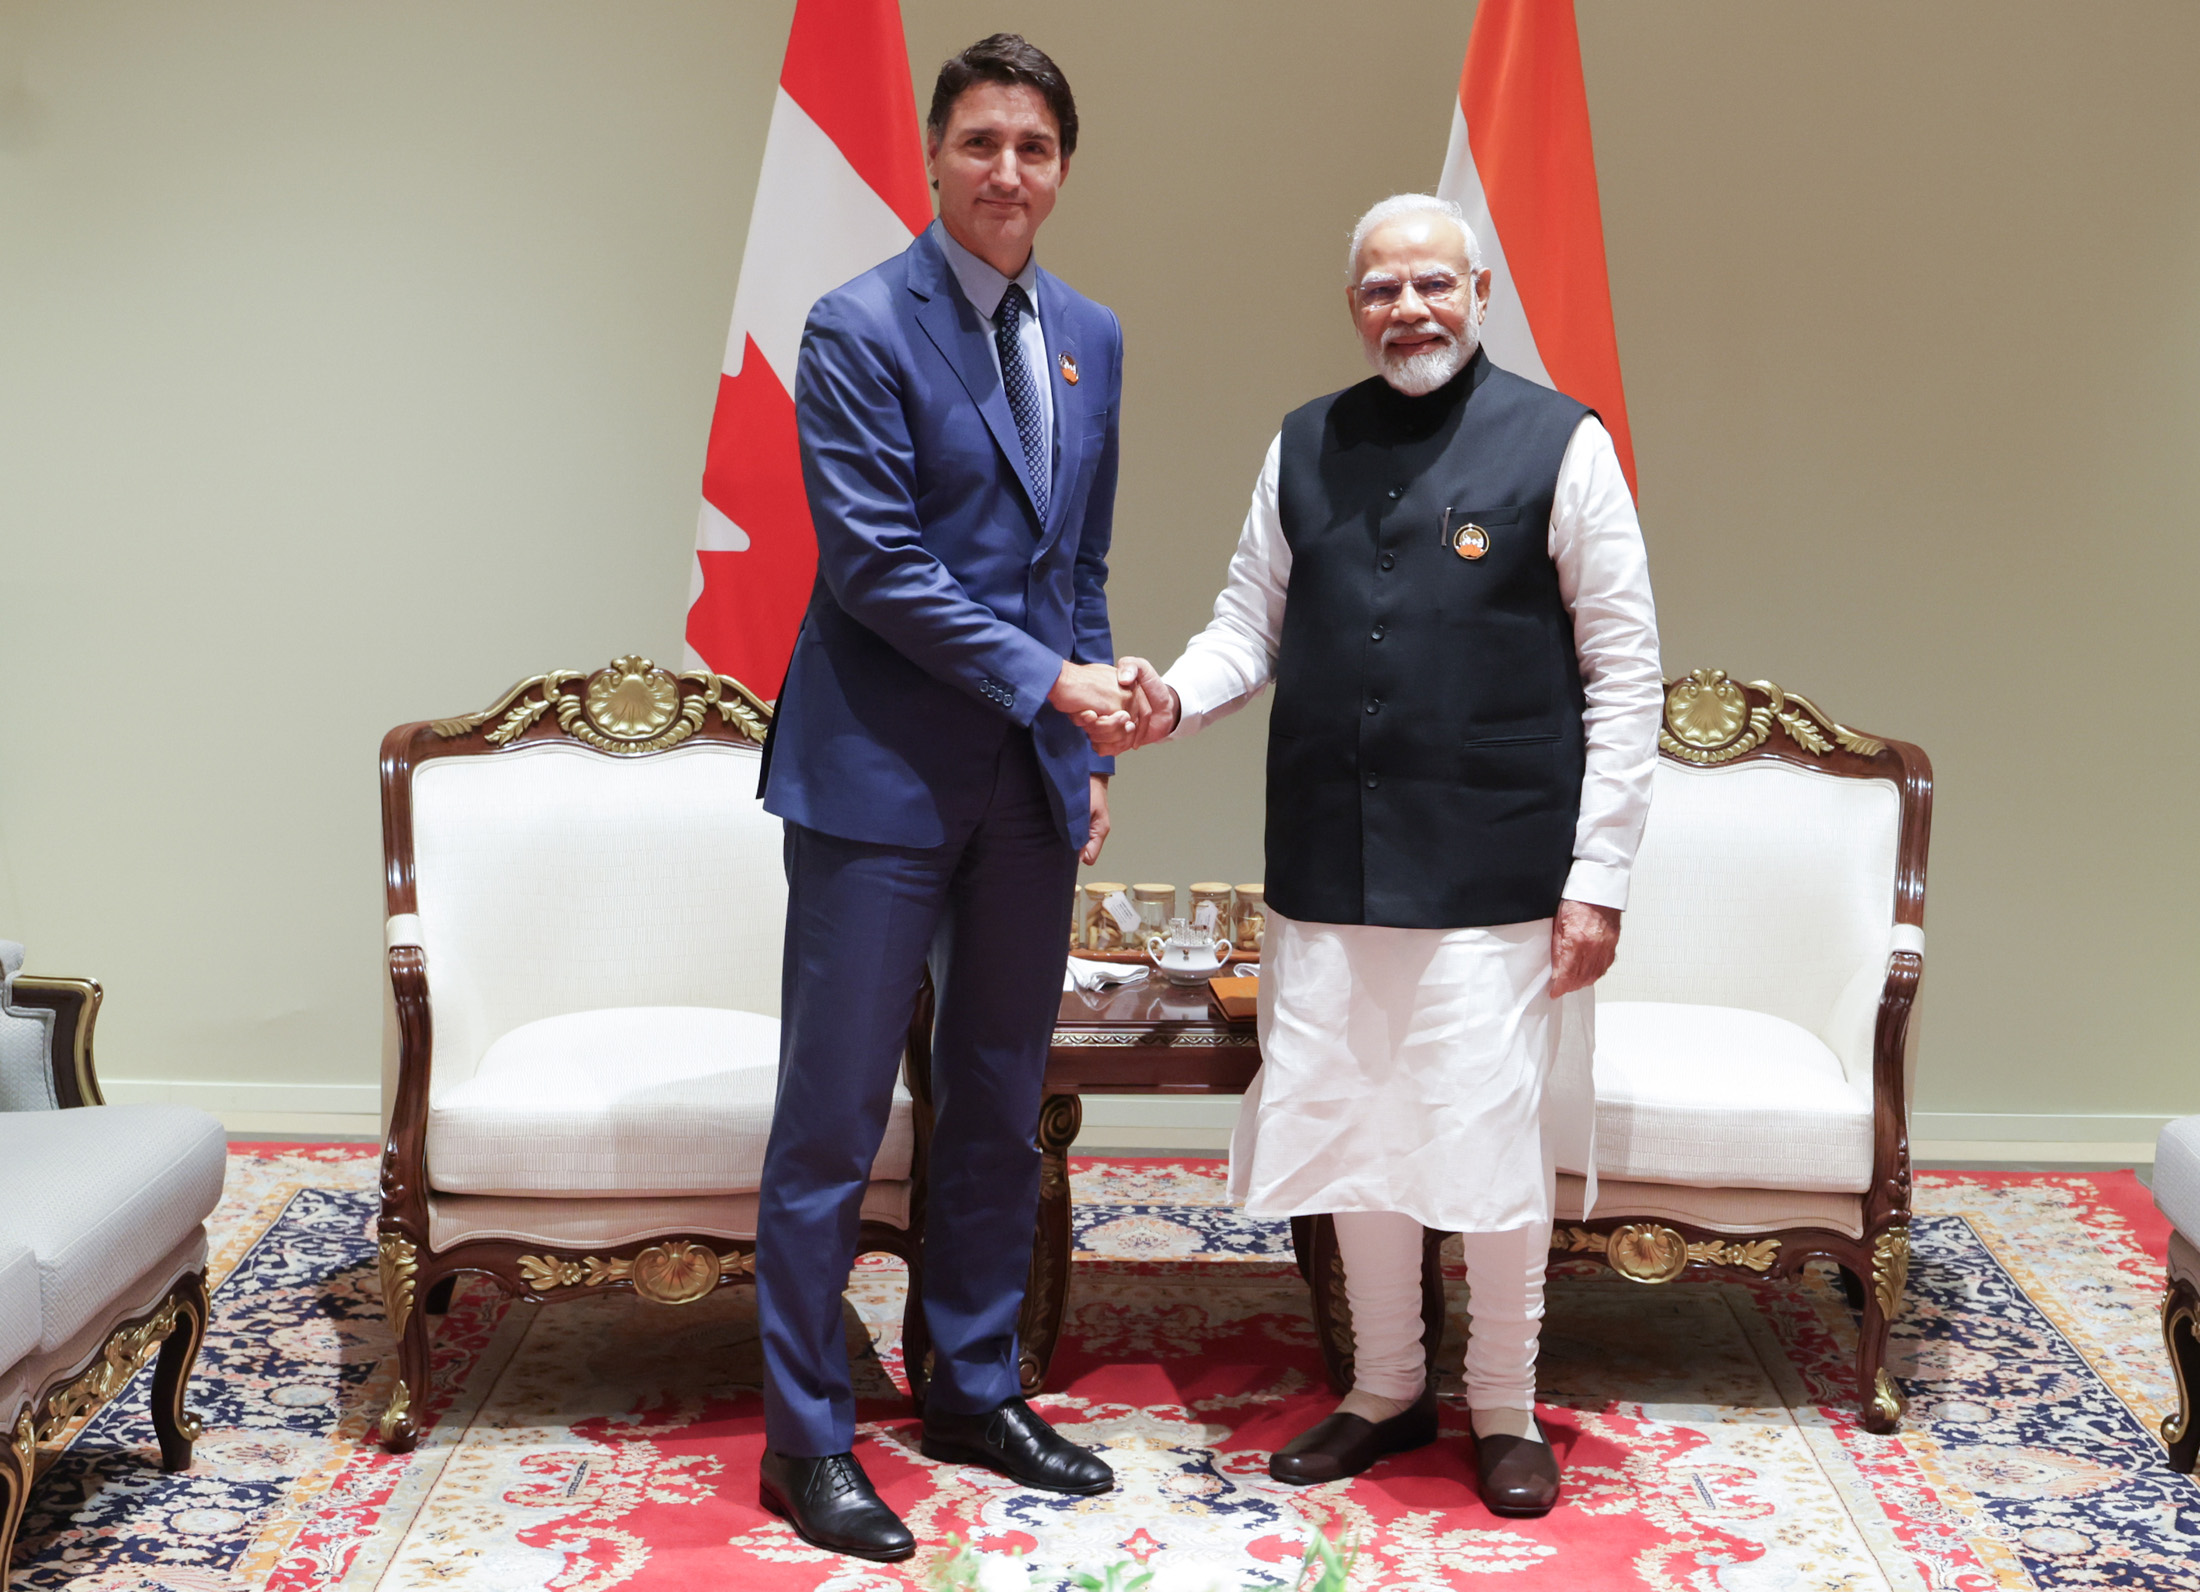 Can India Canada Relations Improve Amid Recent Strains?